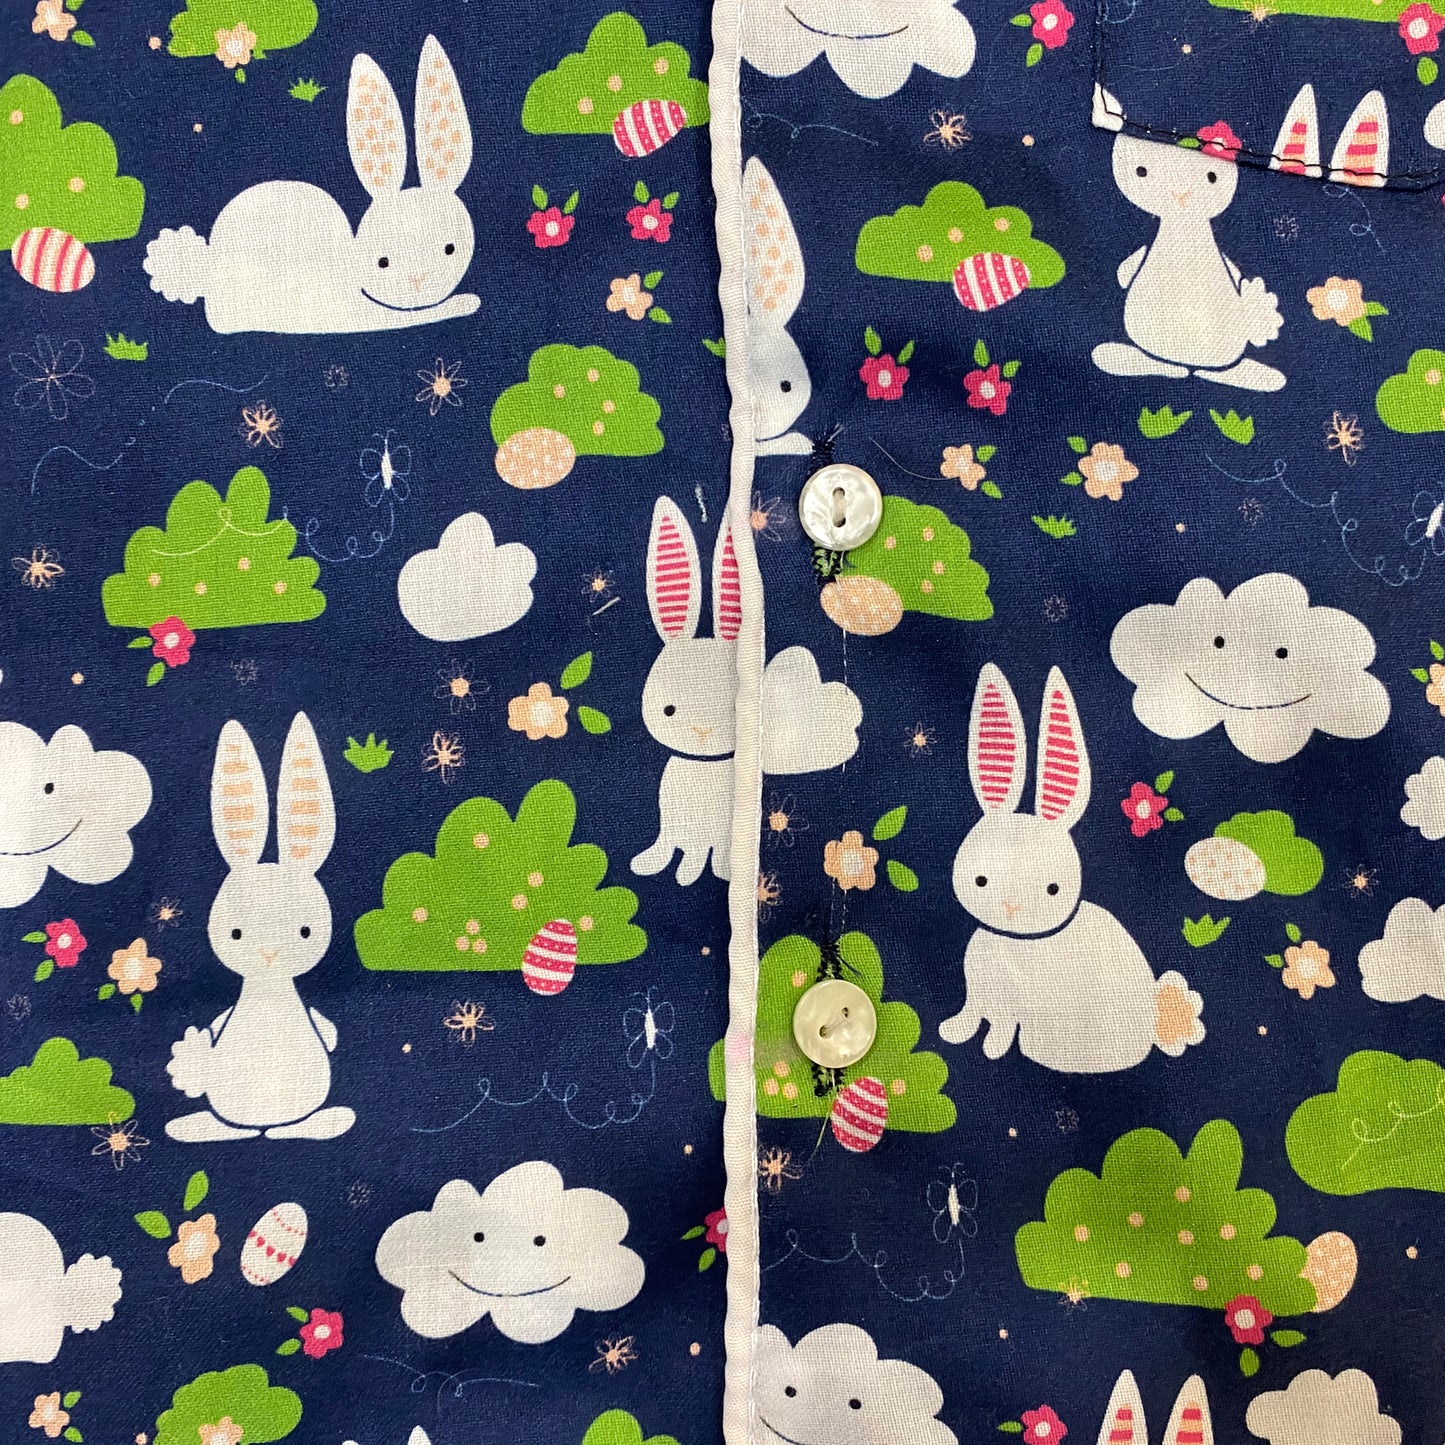 bunny-print-cotton-night-suit-set-for-babies